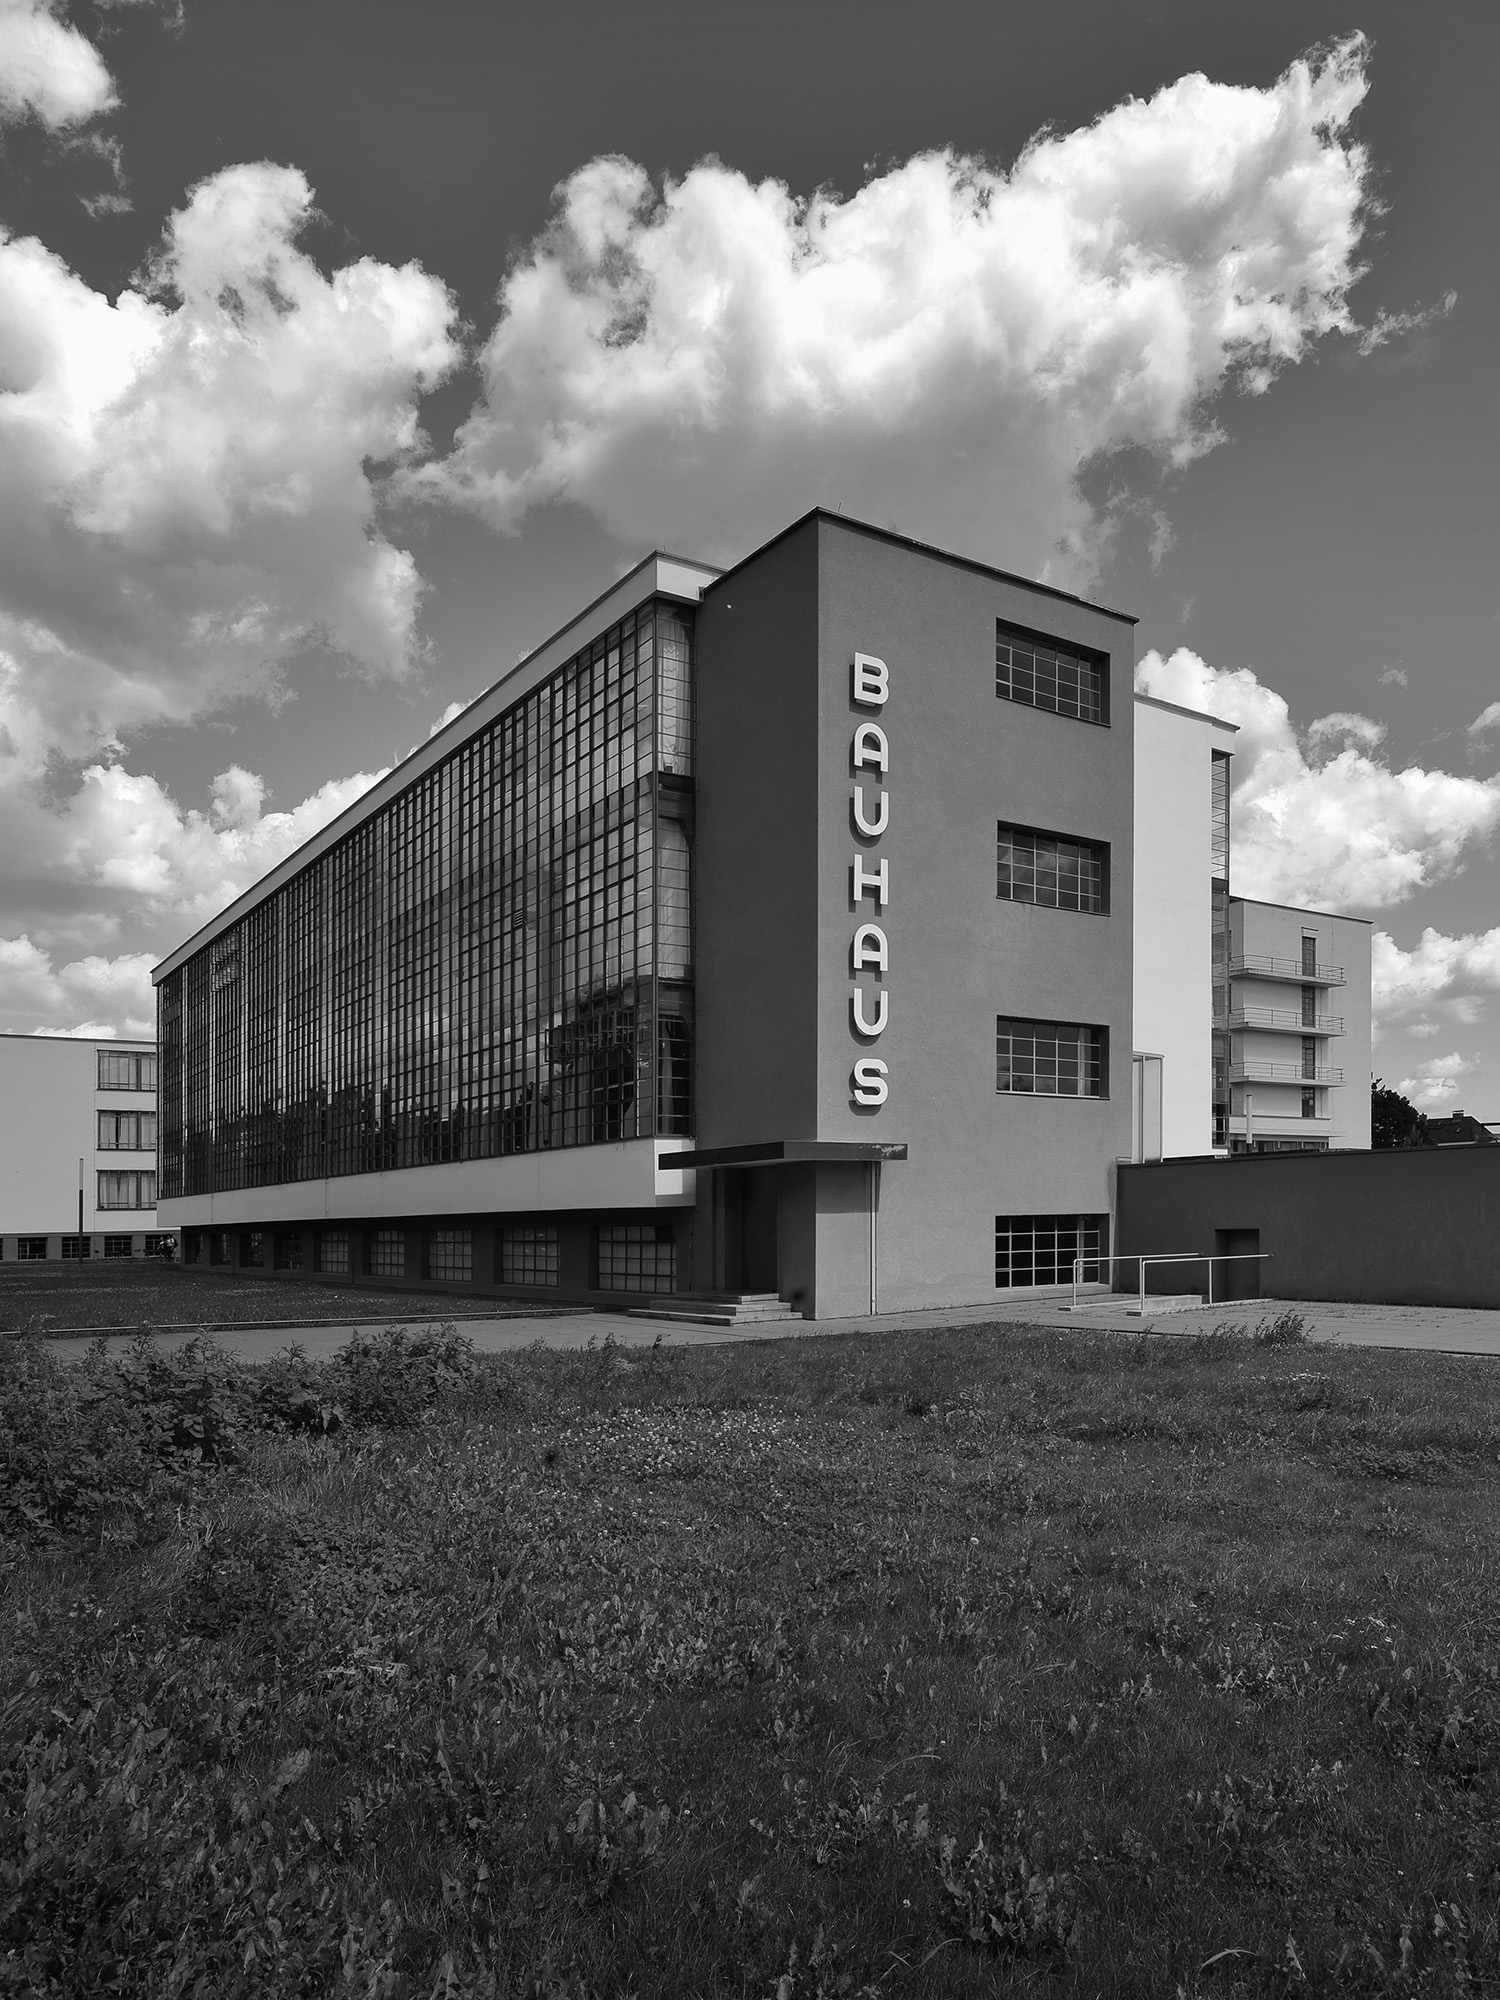 Bauhaus Buiding
Walter gropius, 1926
Dessau